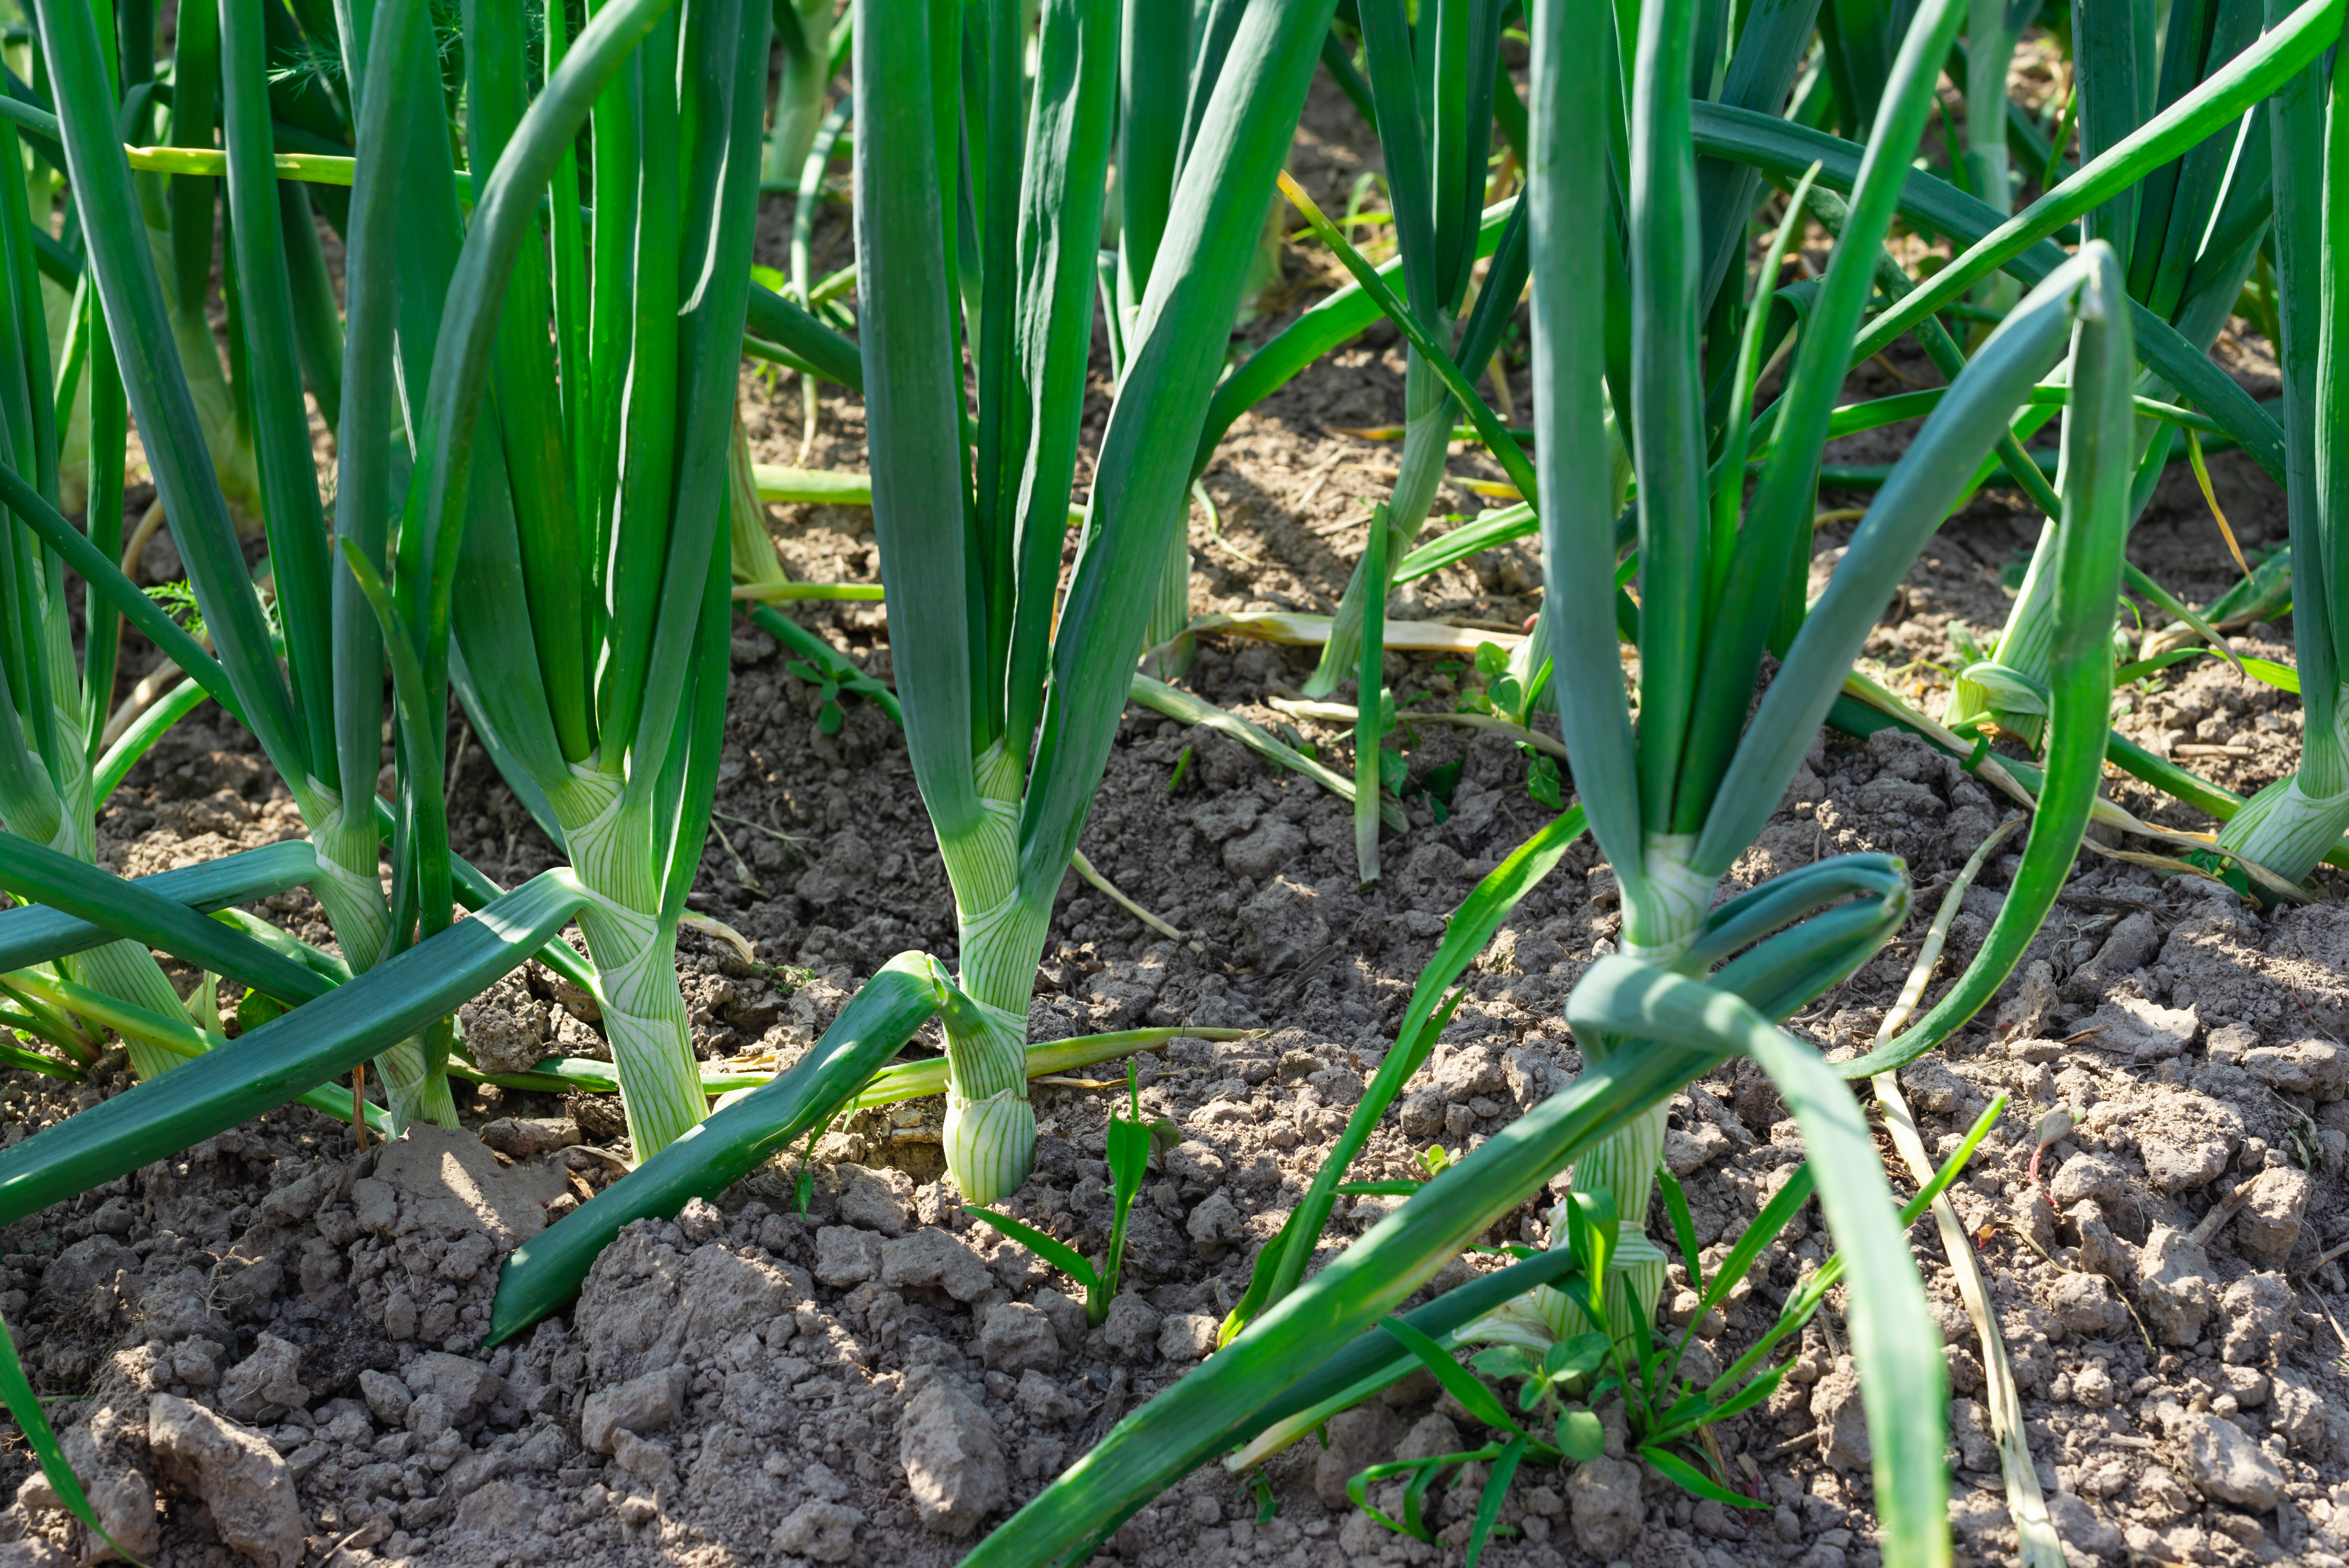 Green onions in a garden